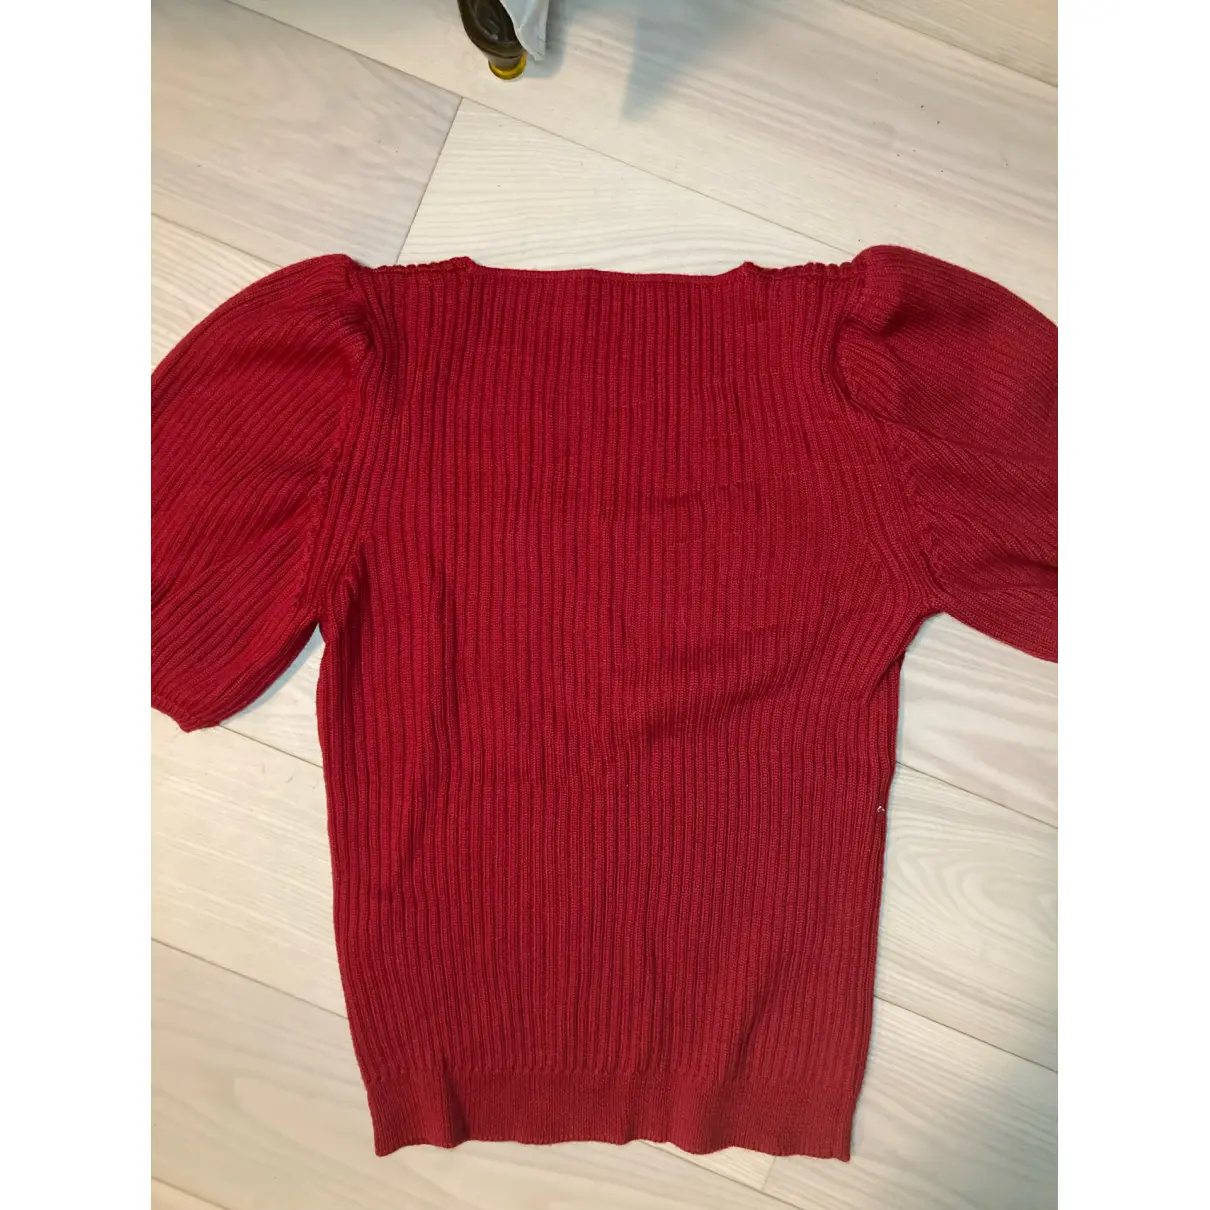 Buy Red Valentino Garavani Wool sweatshirt online